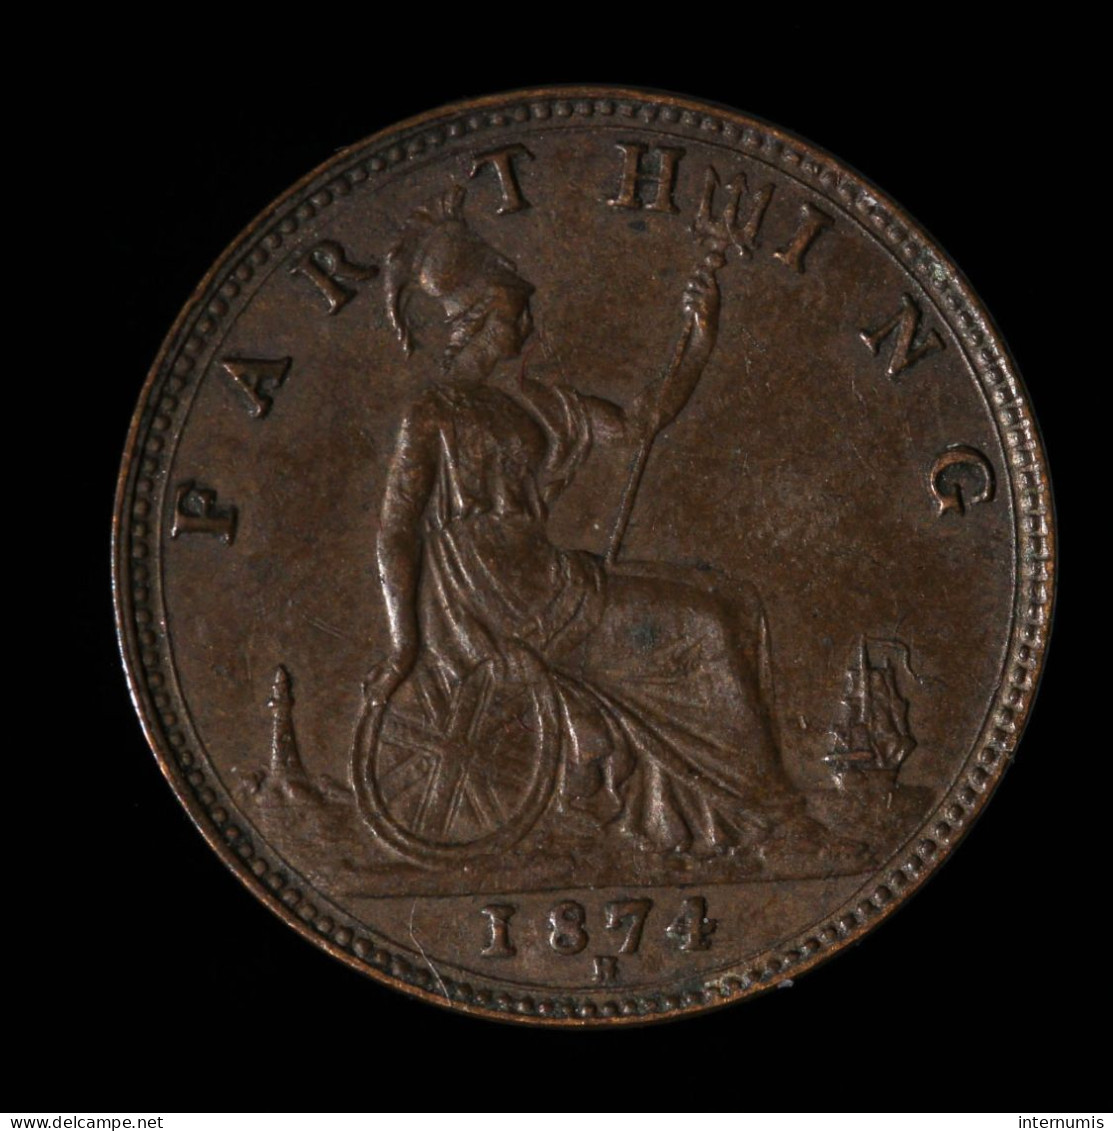  Grande-Bretagne / United Kingdom, Victoria, Farthing, 1874, Heaton, Bronze, TTB+ (AU),
KM#753, S.3959 - B. 1 Farthing